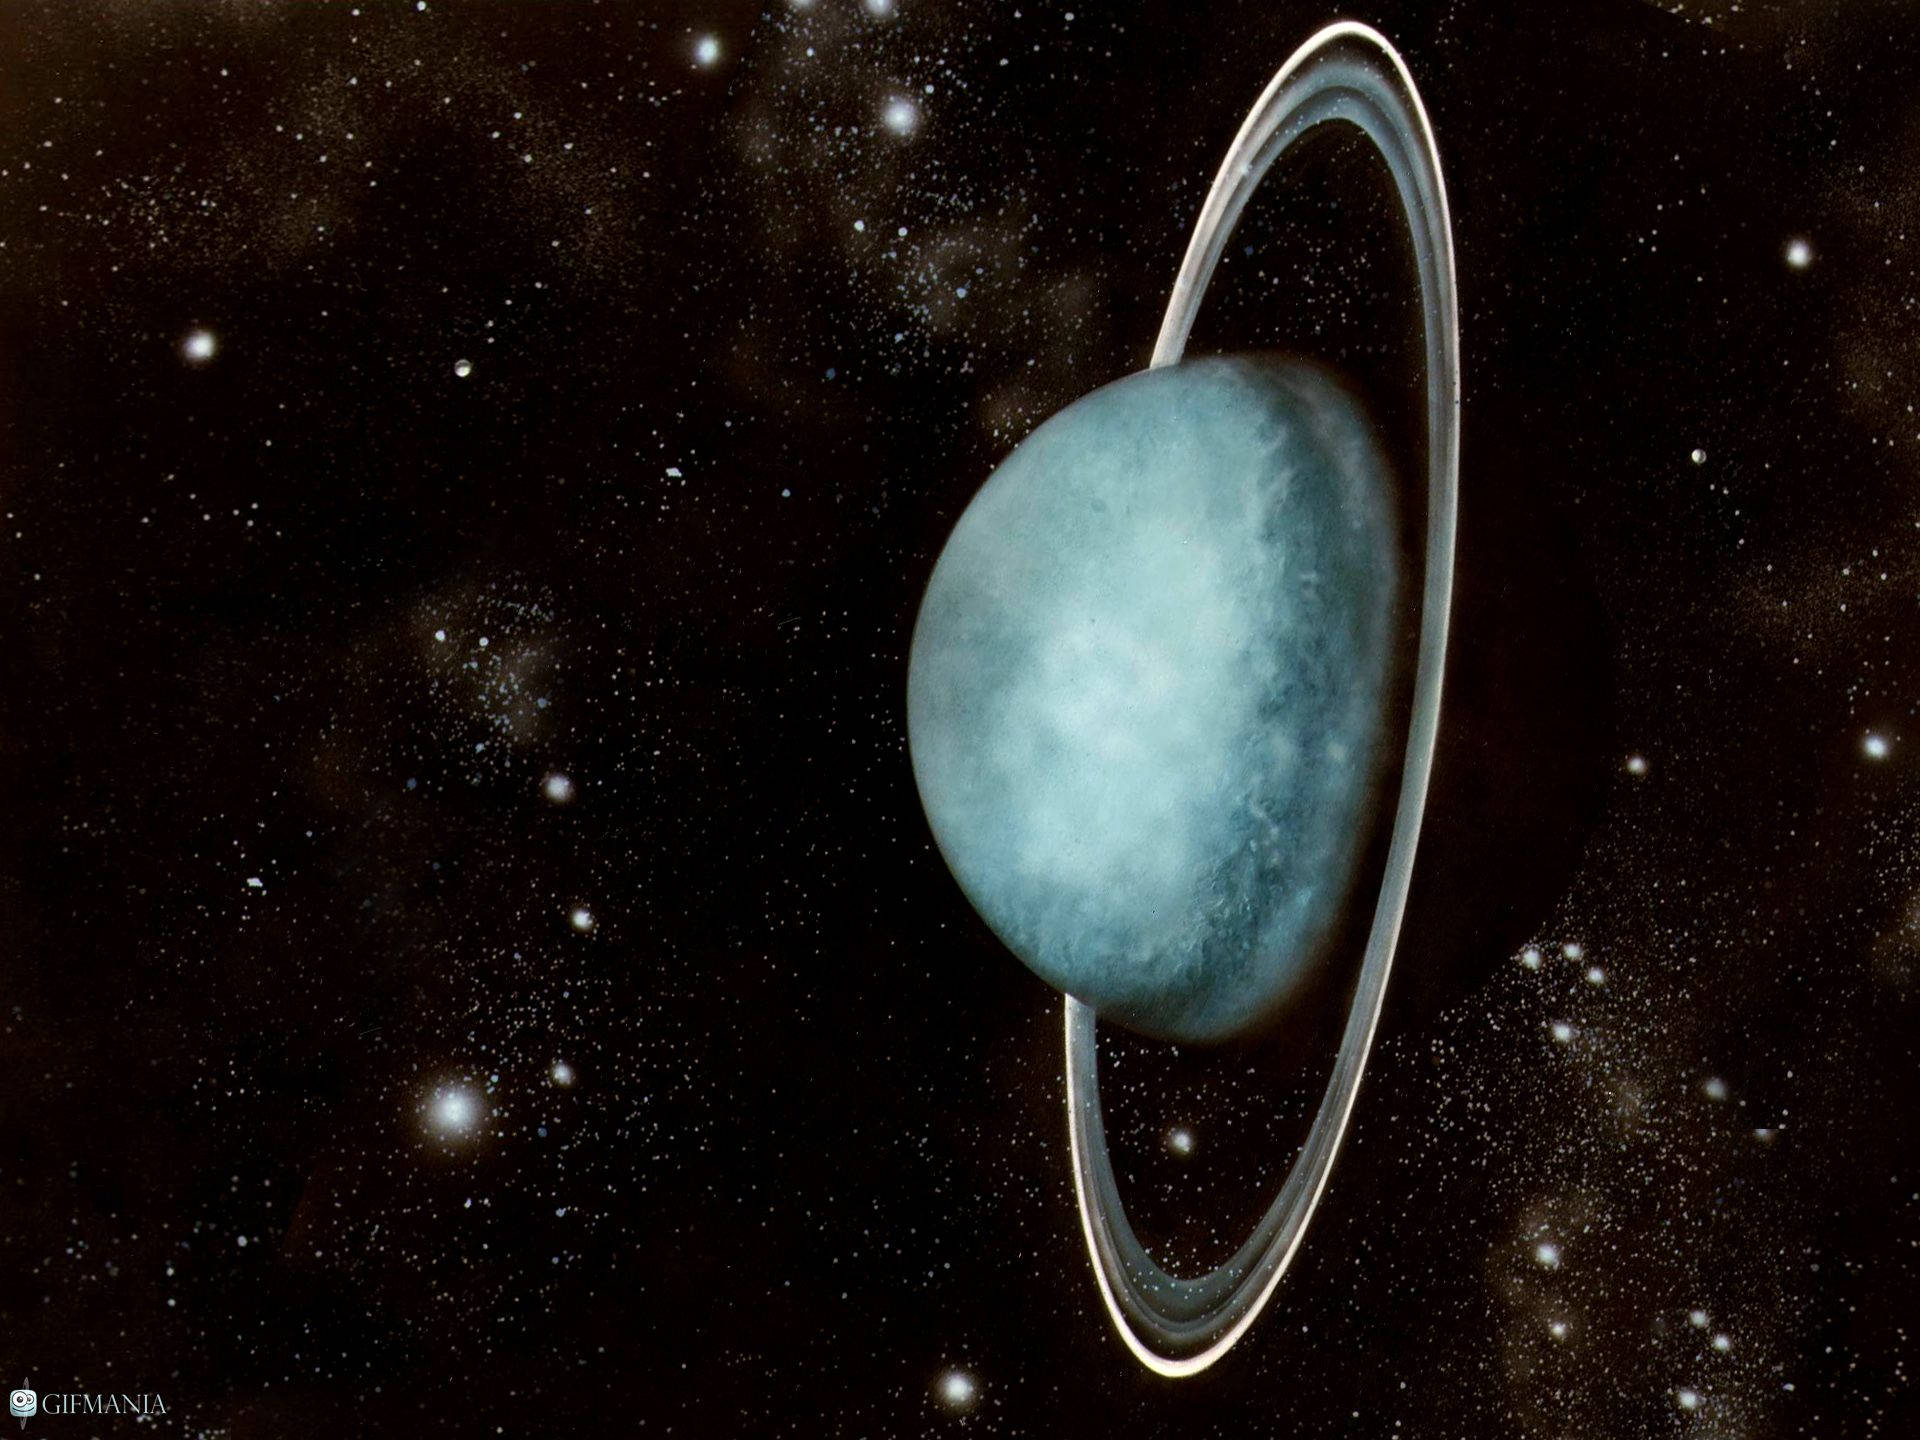 Uranus Pictures  Download Free Images on Unsplash